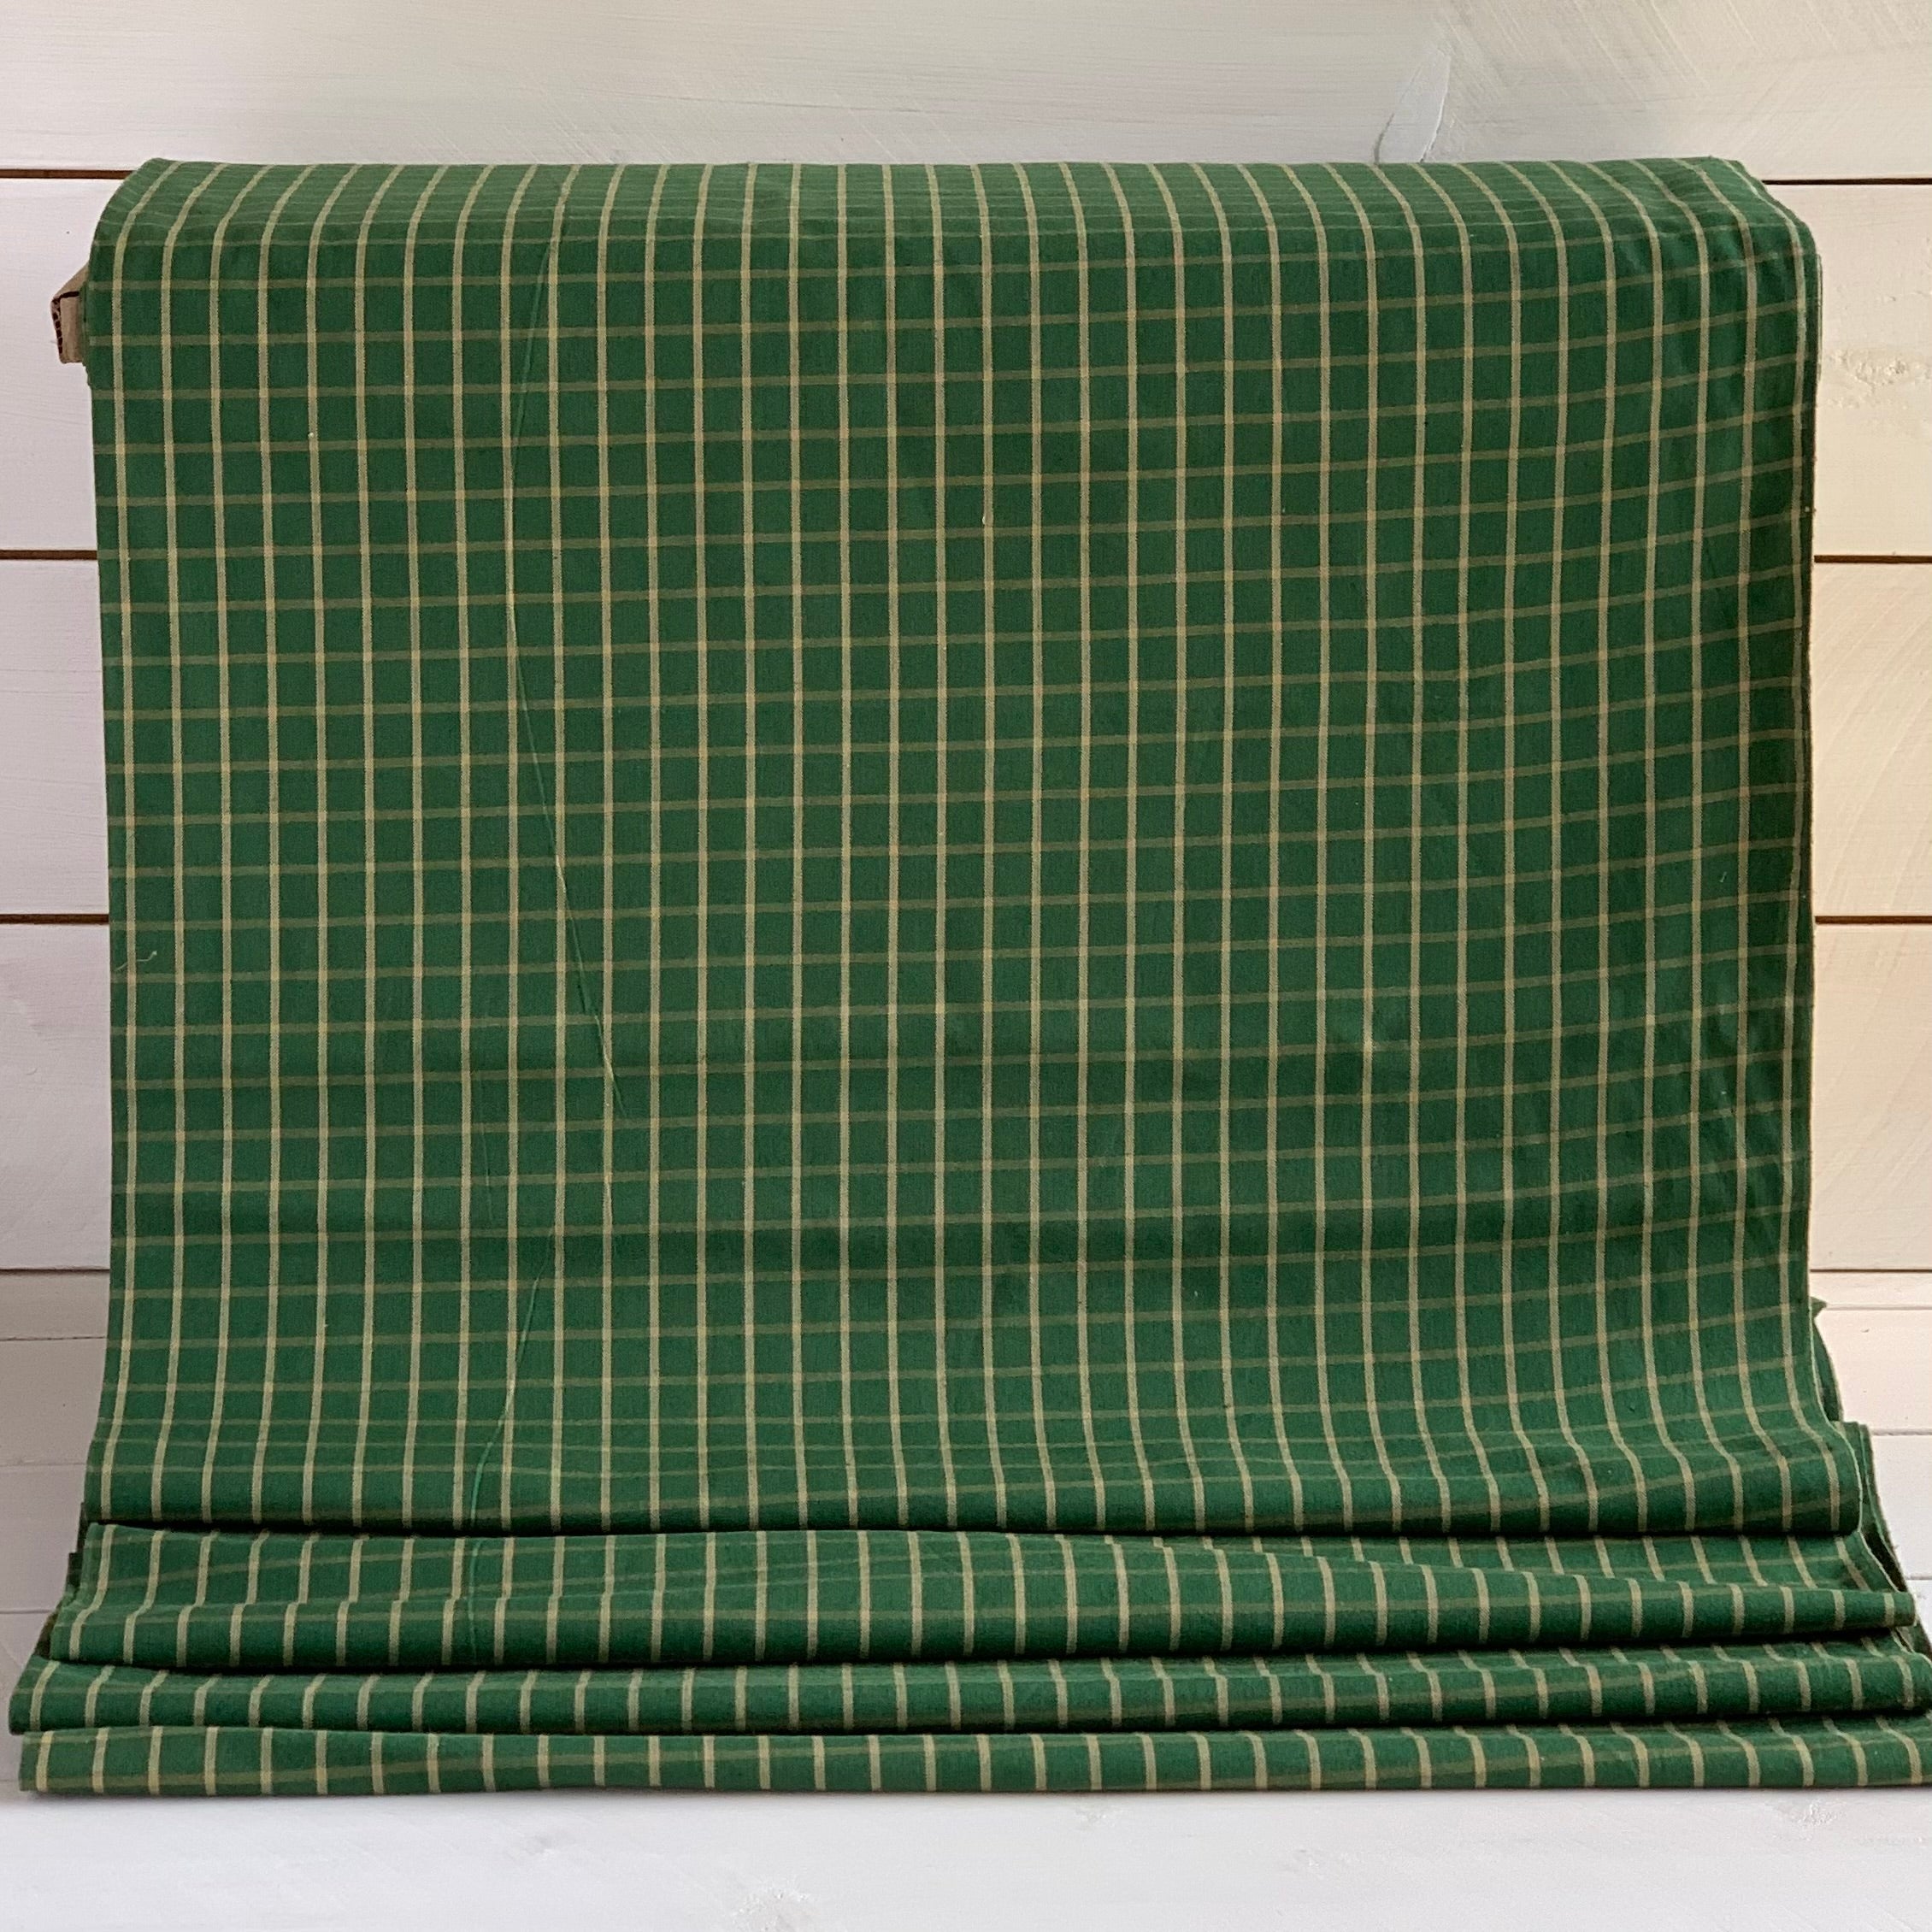 Green and Beige Mini Check Plaid - Homespun Fabric - 401